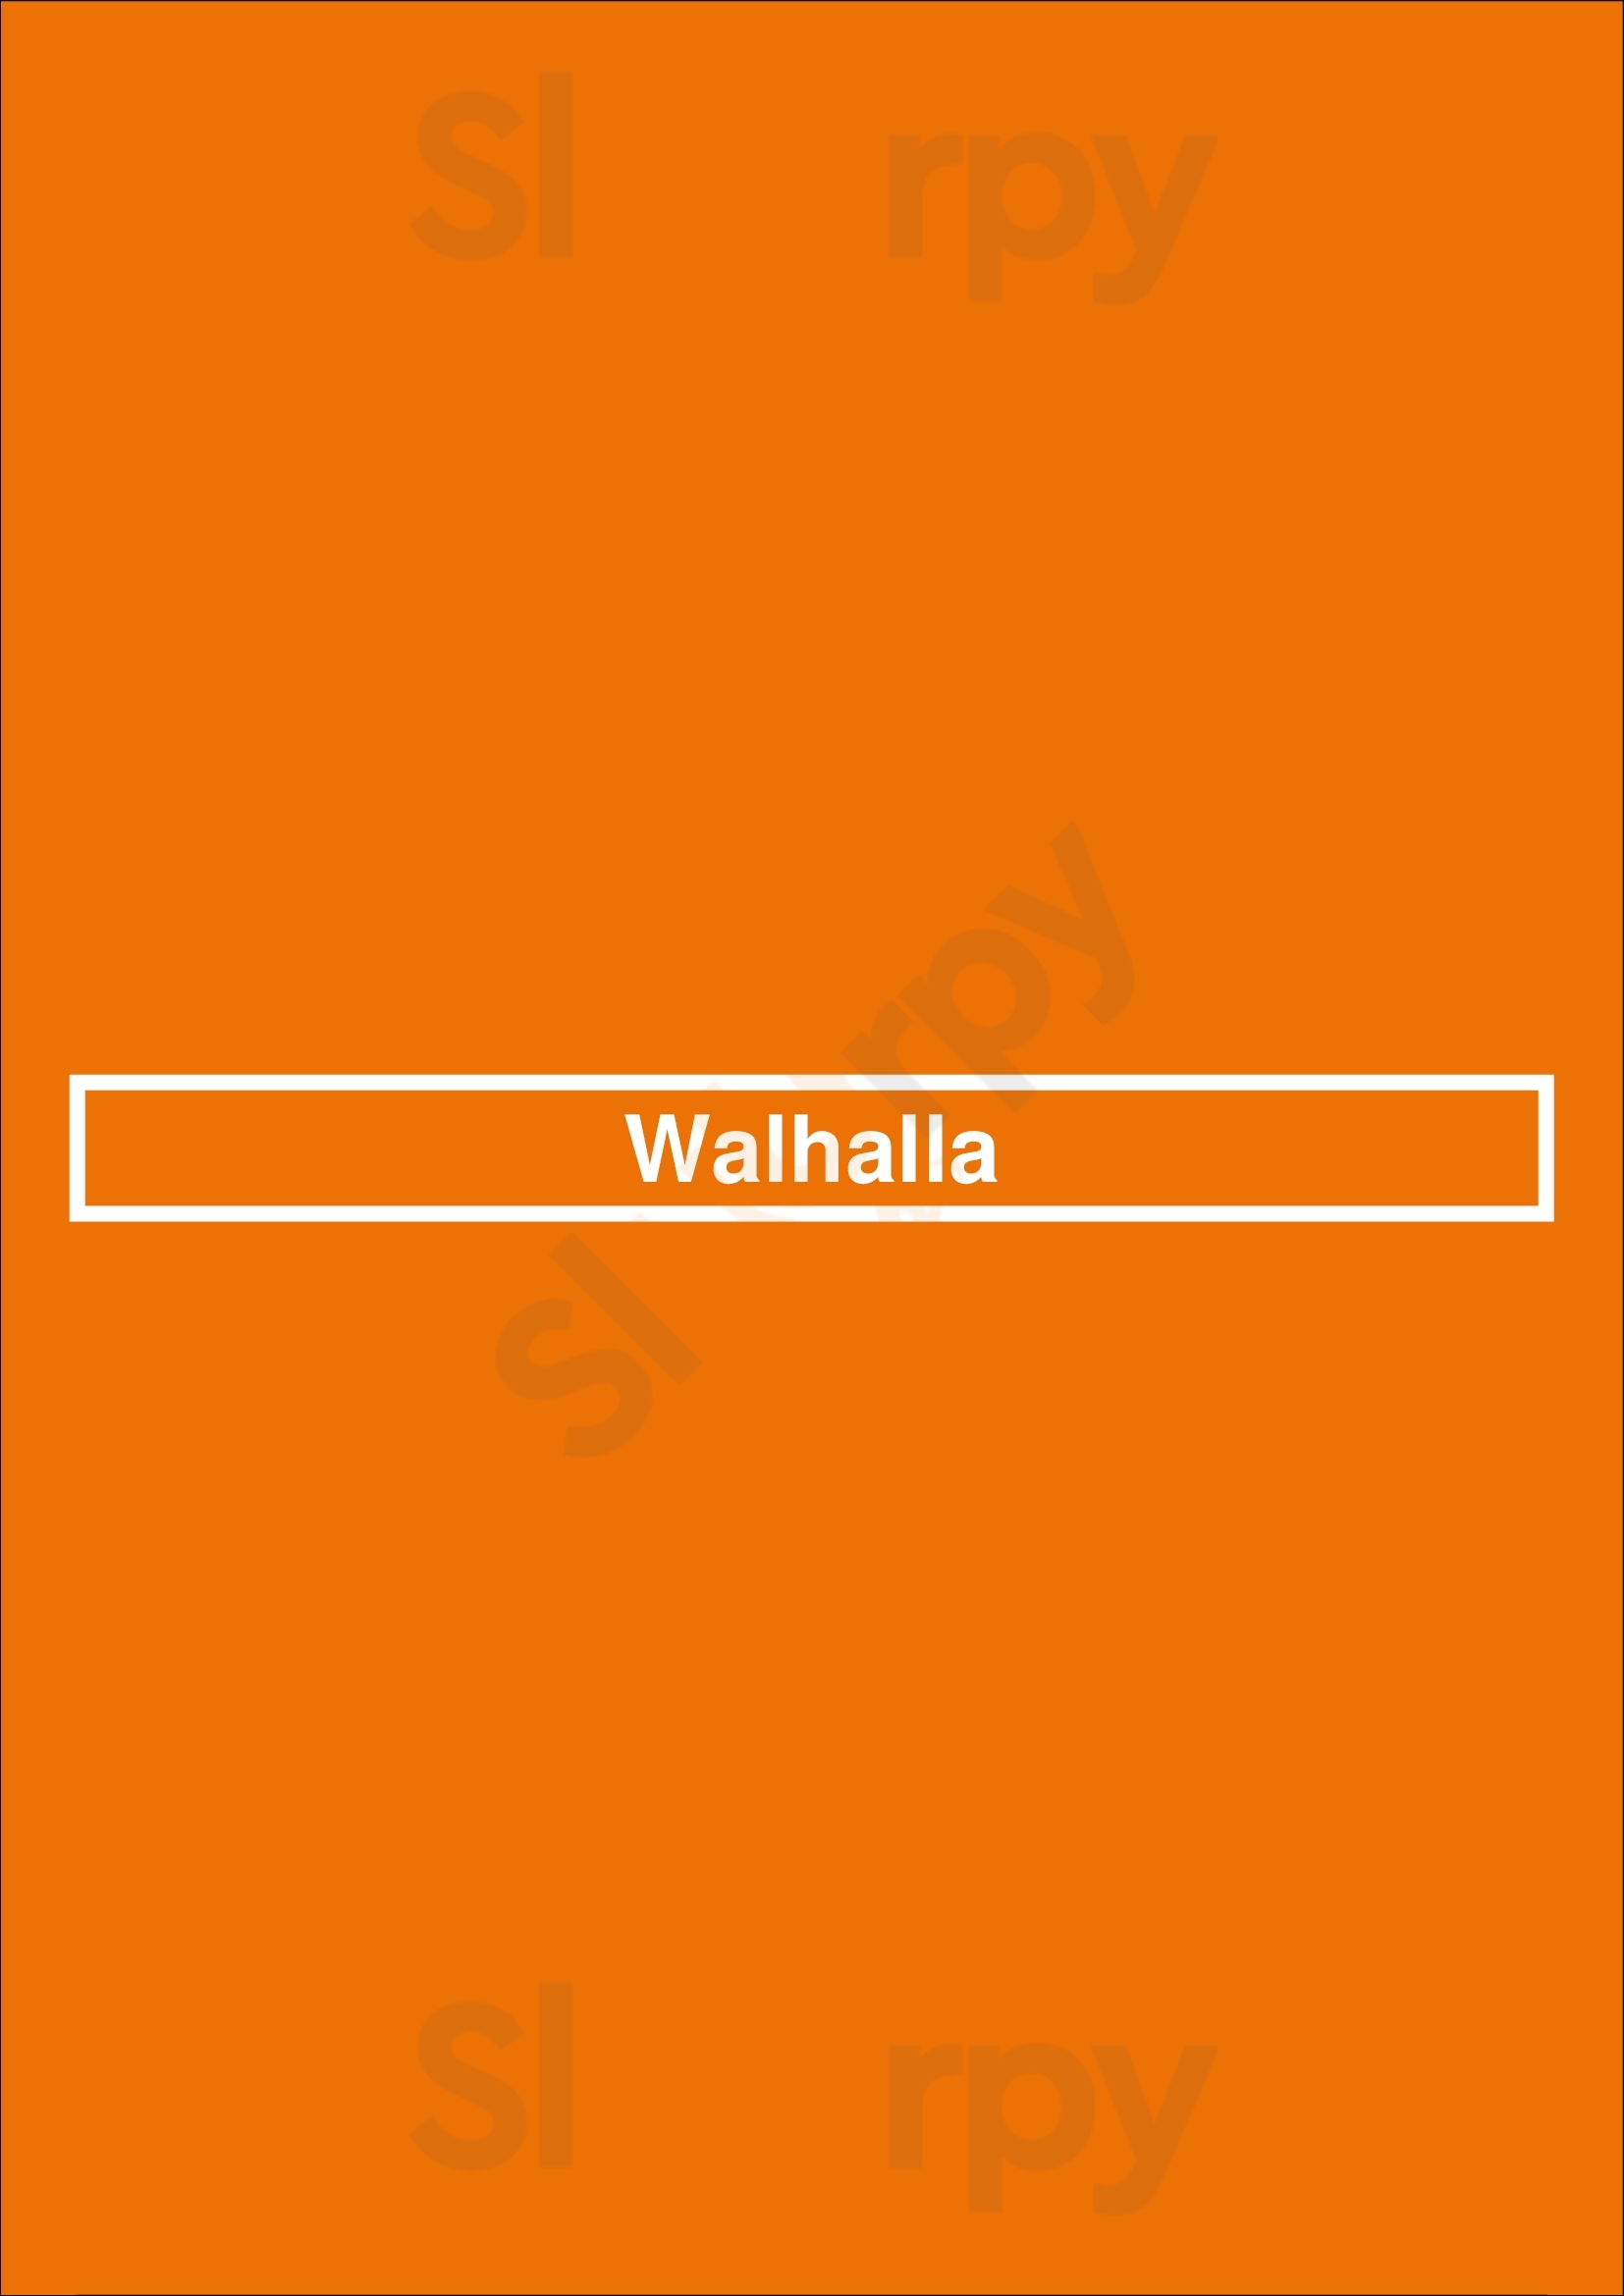 Walhalla Harderwijk Menu - 1